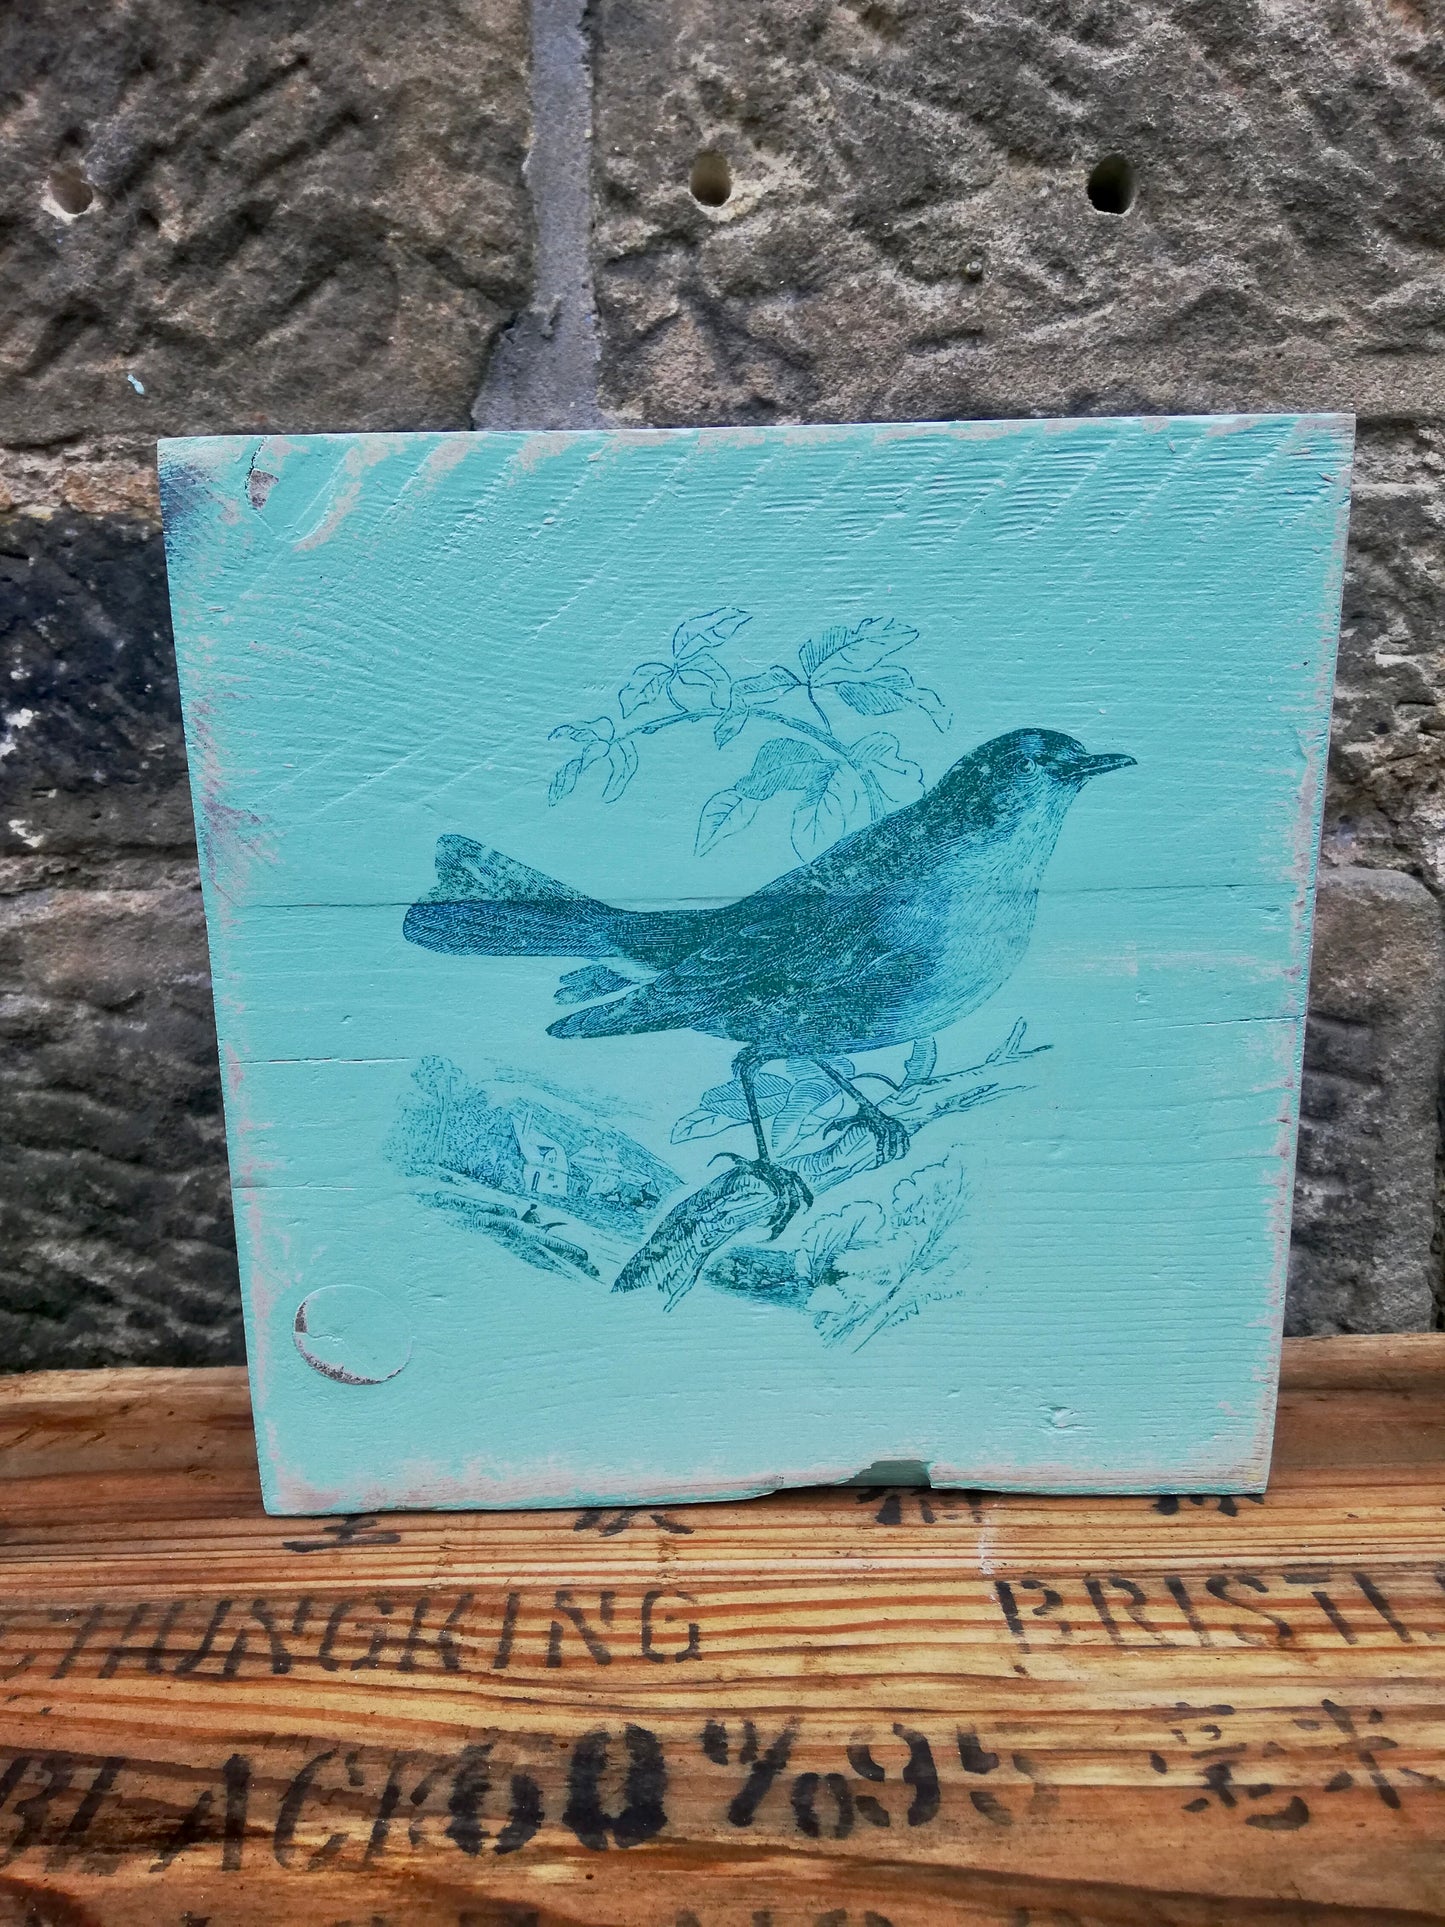 Painted wooden art block with bird design.